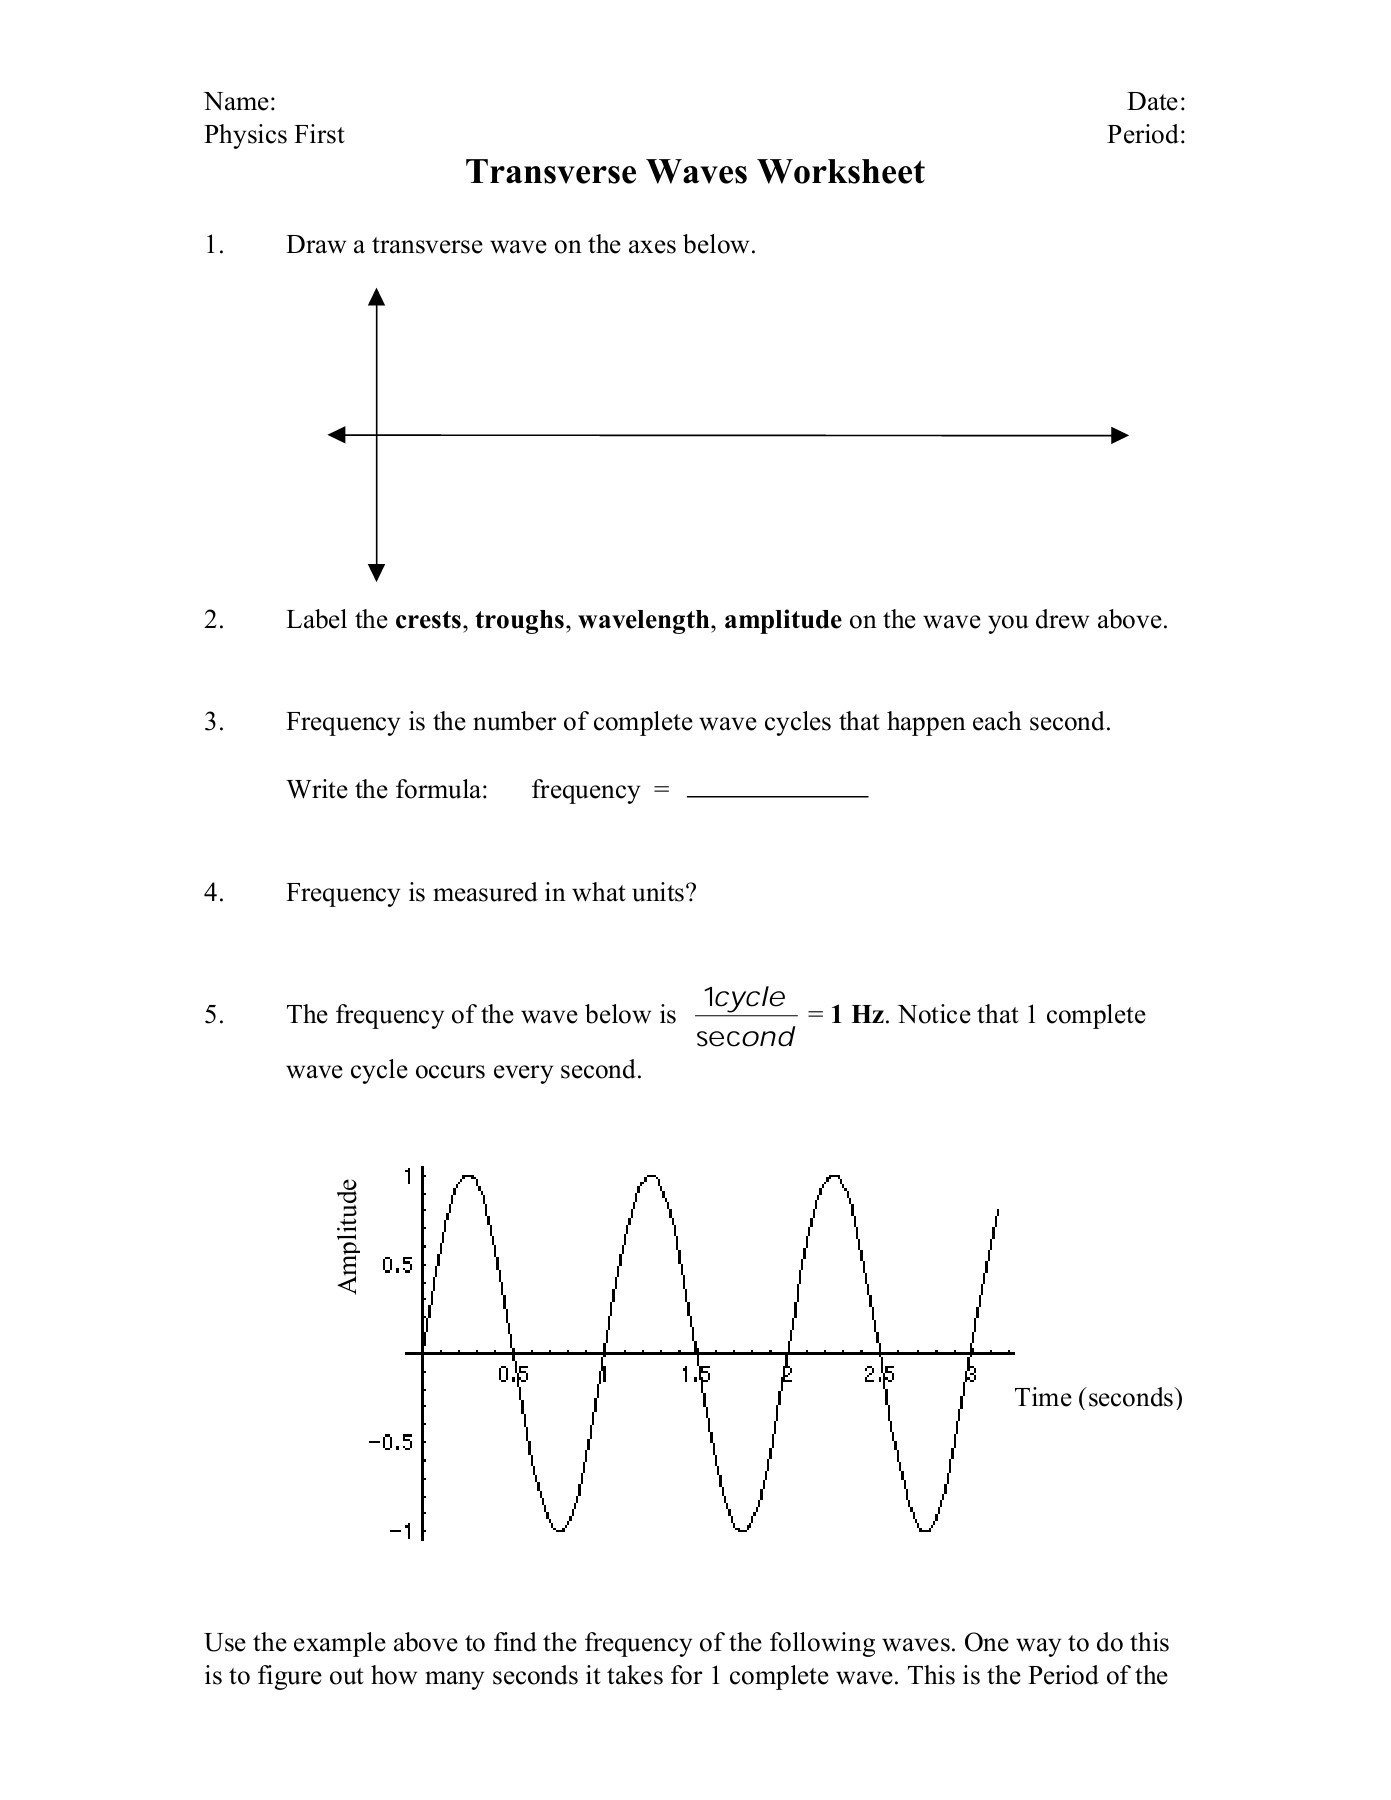 Waves Worksheet Answer Key Transverse Waves Worksheet Varga Sturgis Home Pages 1